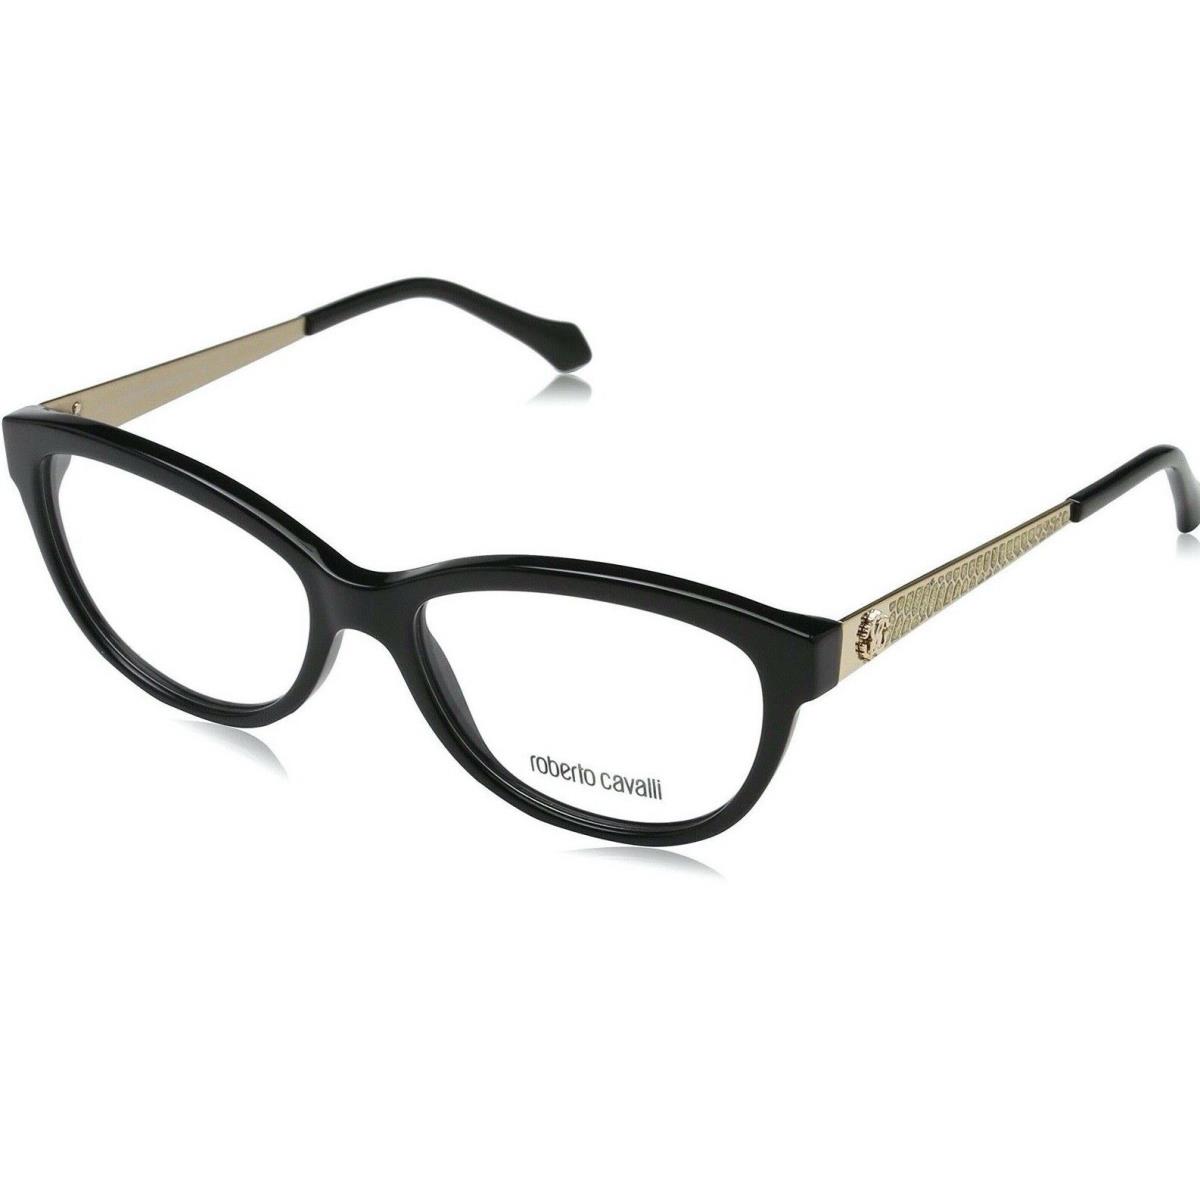 Roberto Cavalli Dabih RC 860 Black 001 Eyeglasses Frame 54-16-140 Cat Eye RC0860